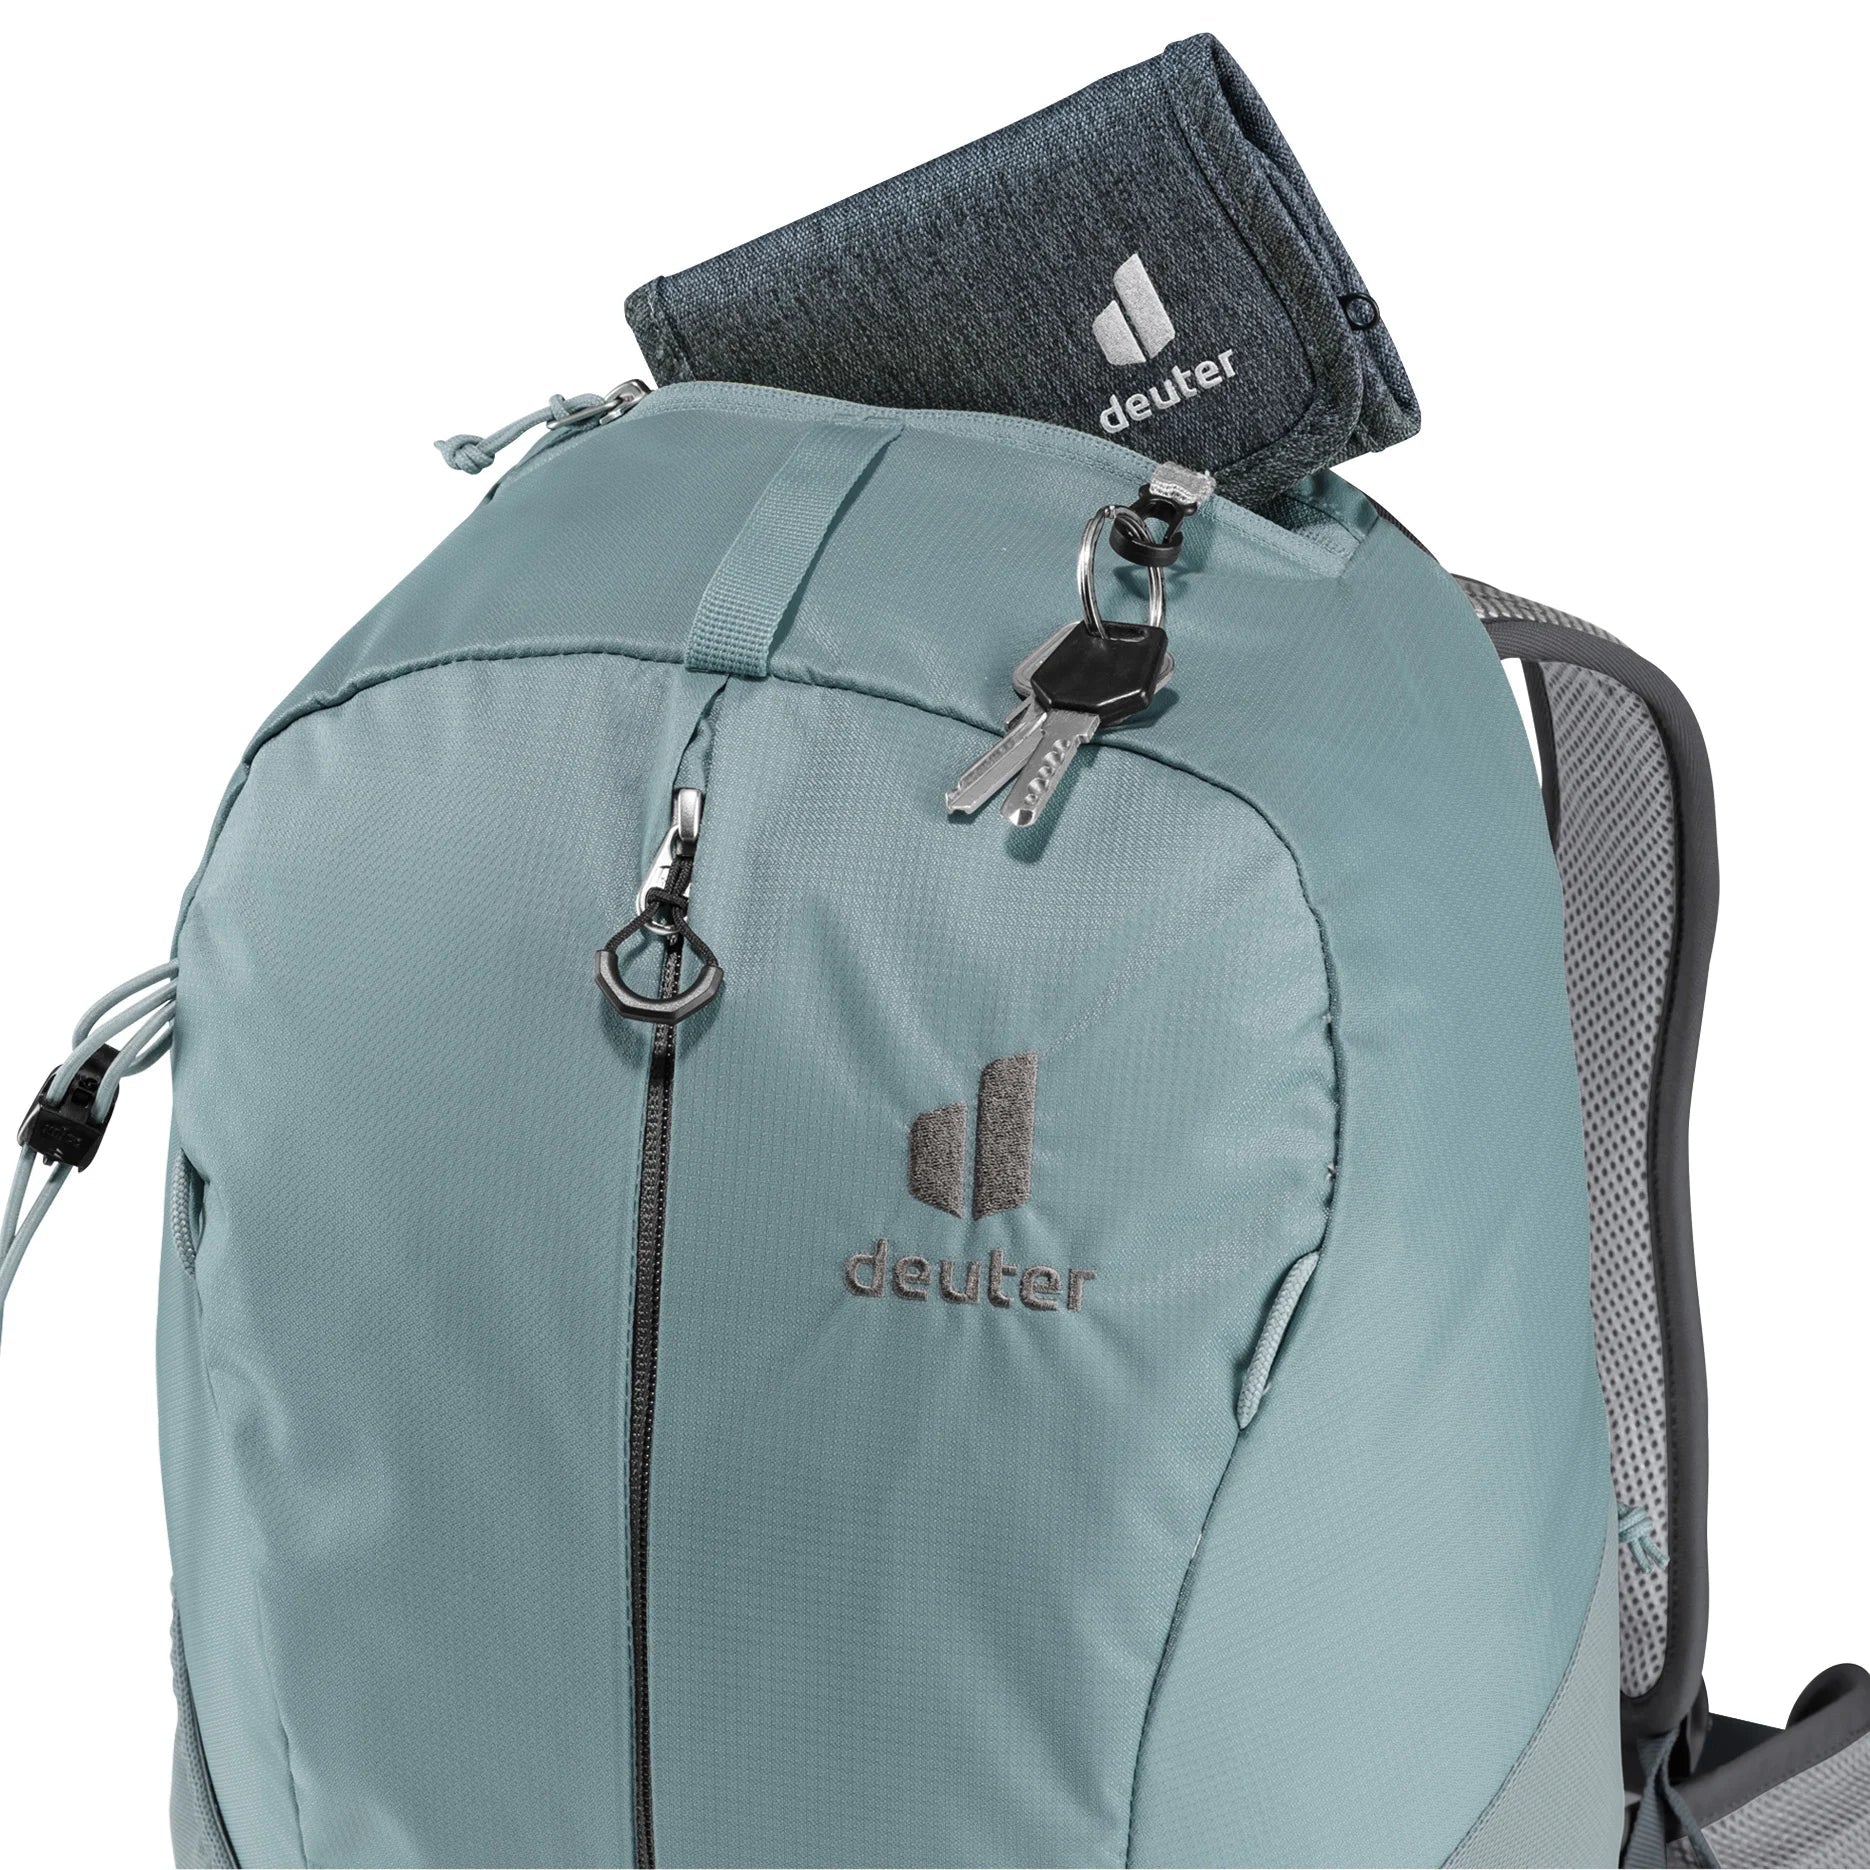 Deuter Travel AC Lite 23 hiking backpack 52 cm - Black